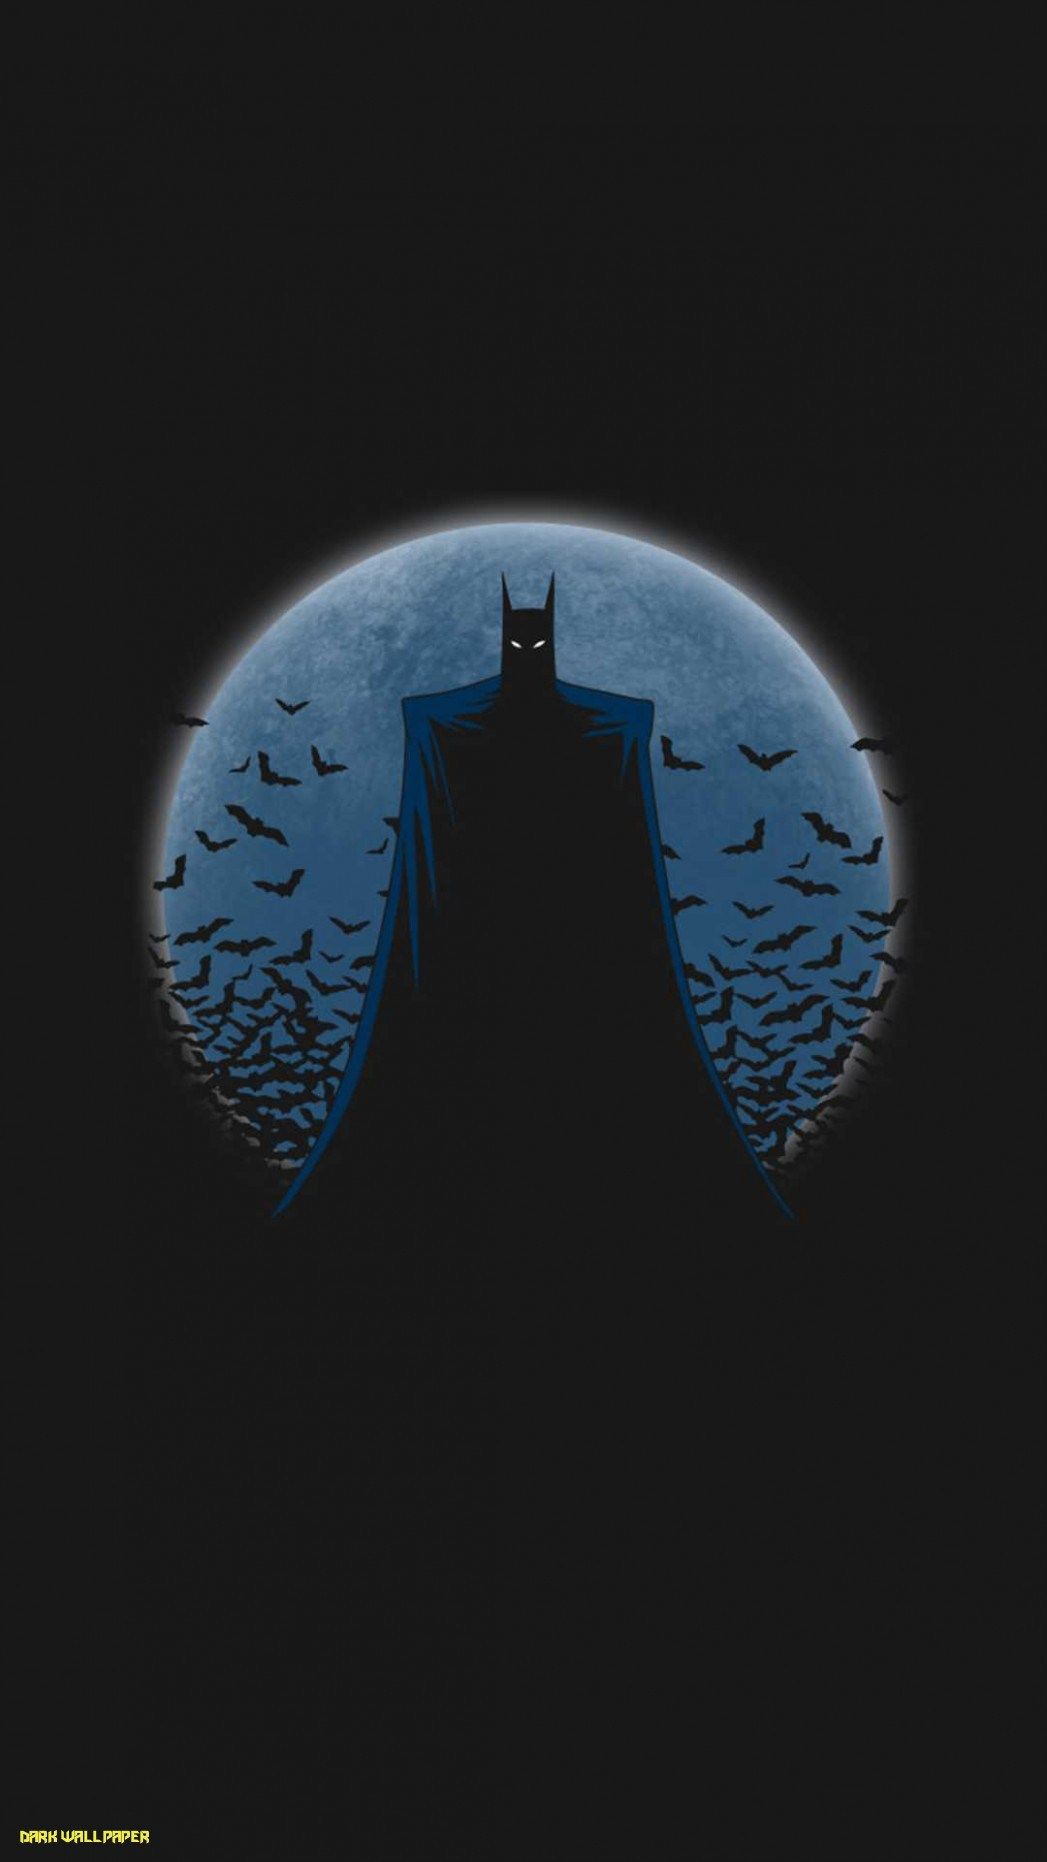 The Batman Minimal Dark Wallpaper